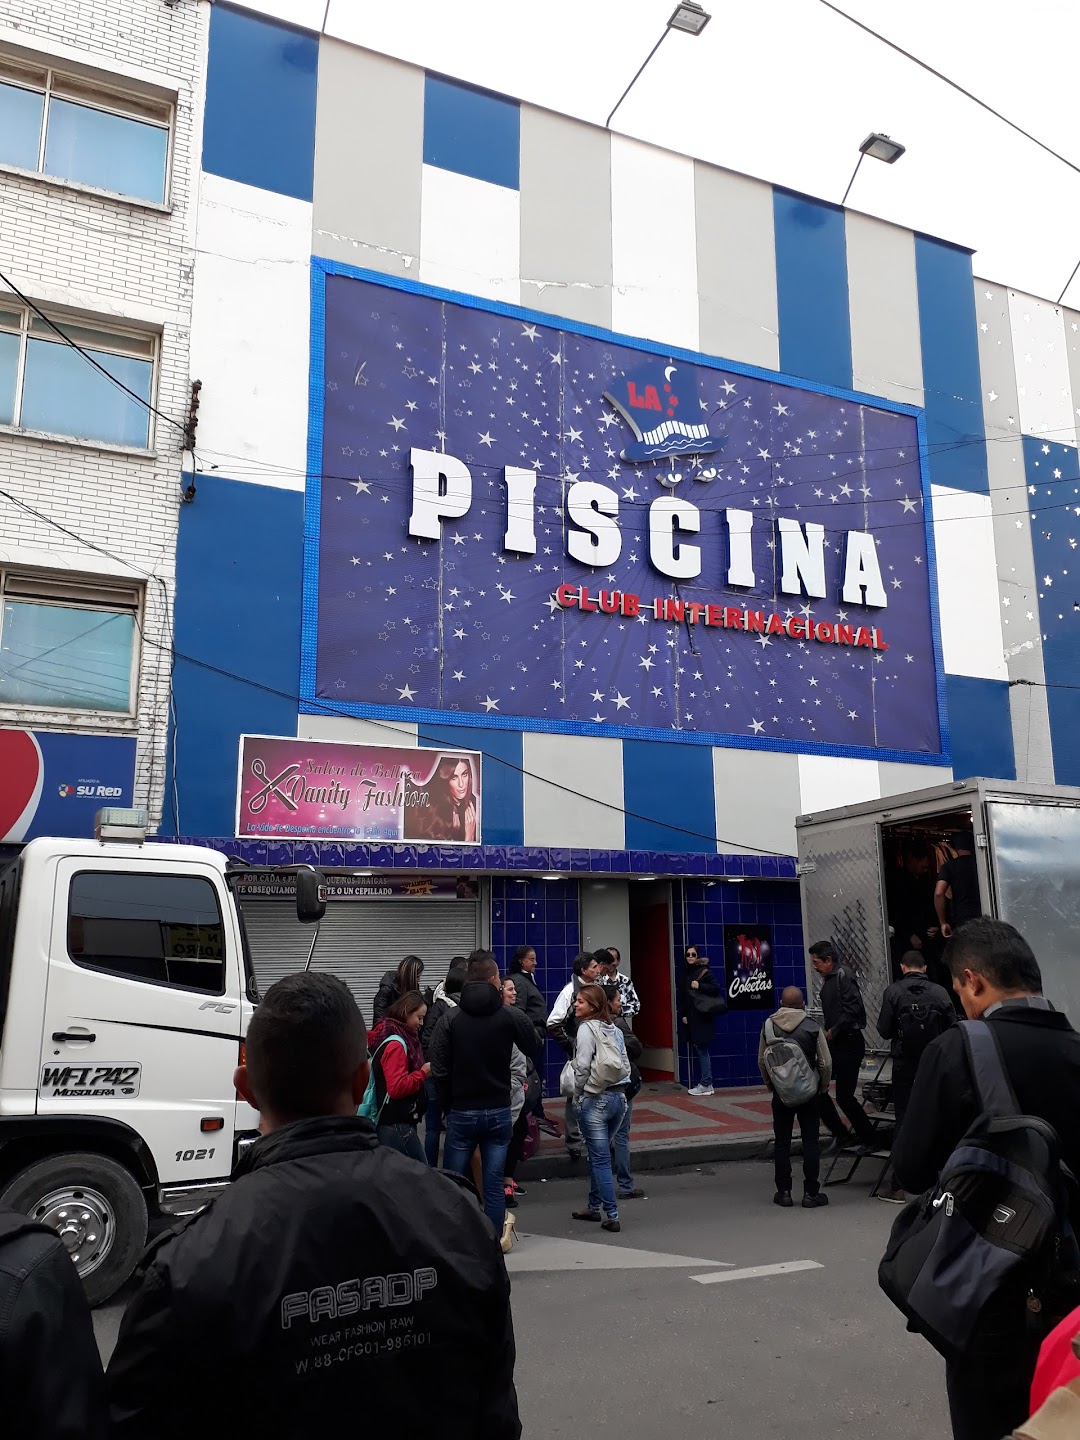 La Piscina Night Club